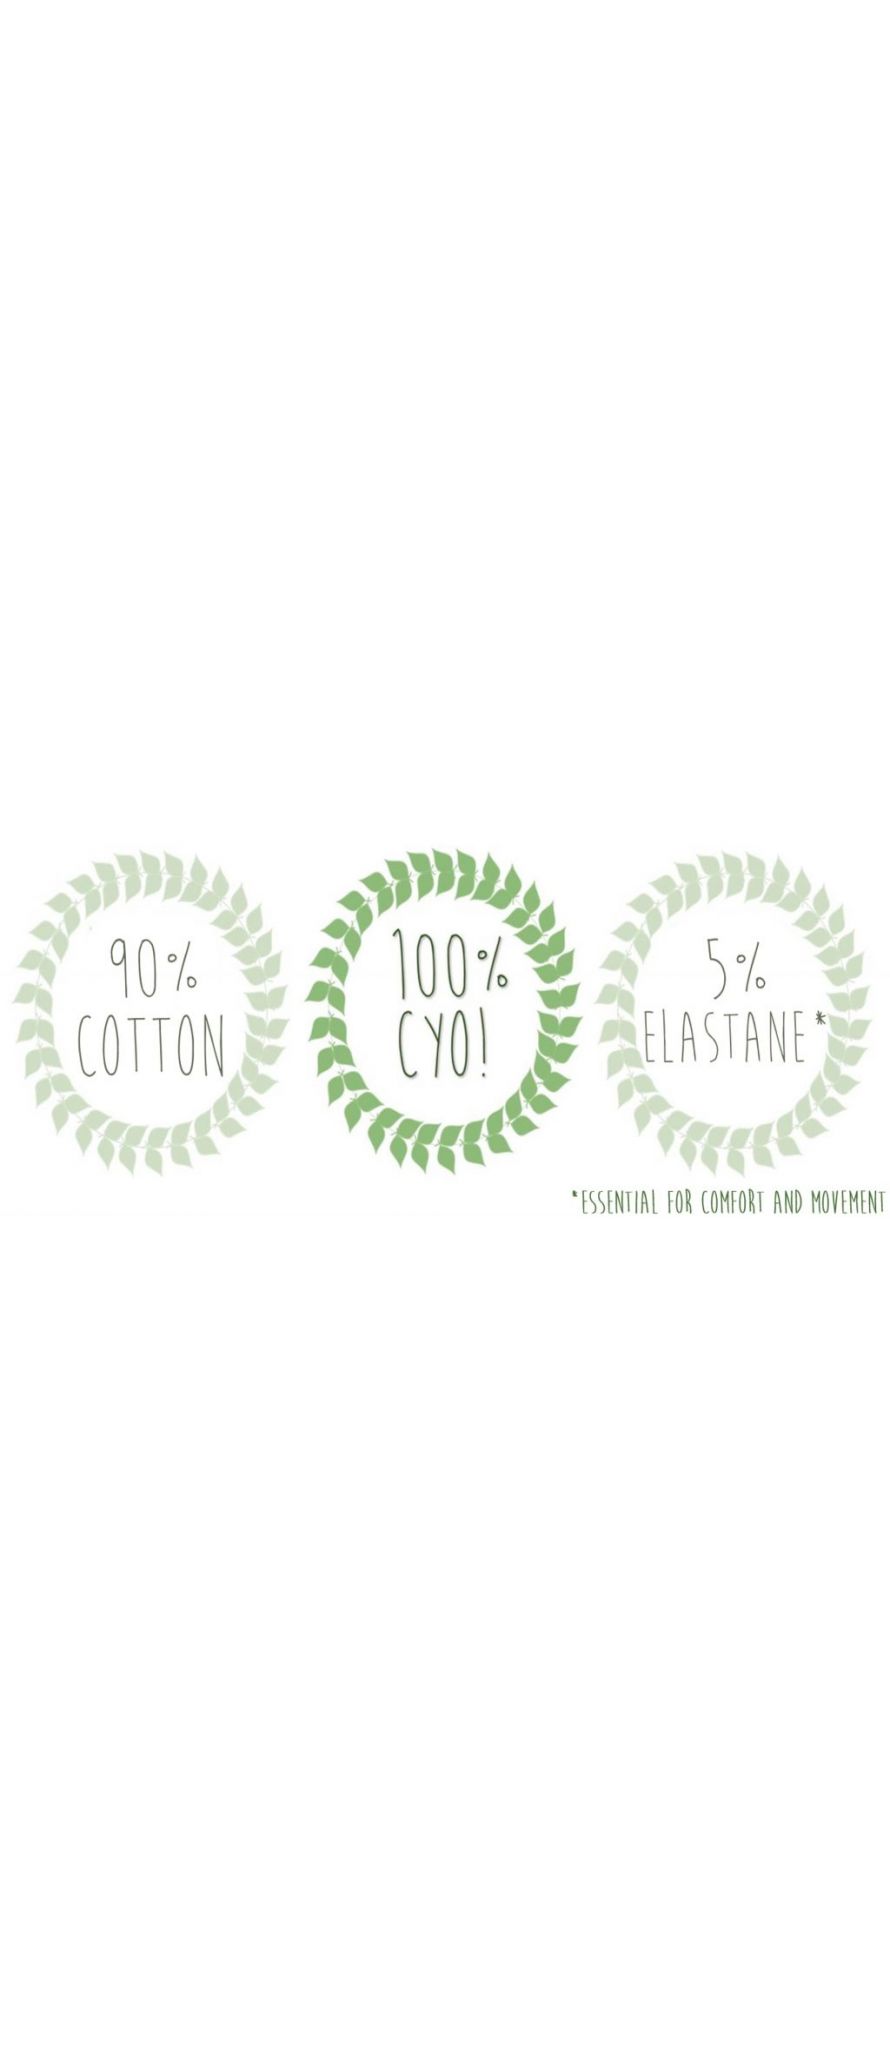 Organic Cotton Percetages